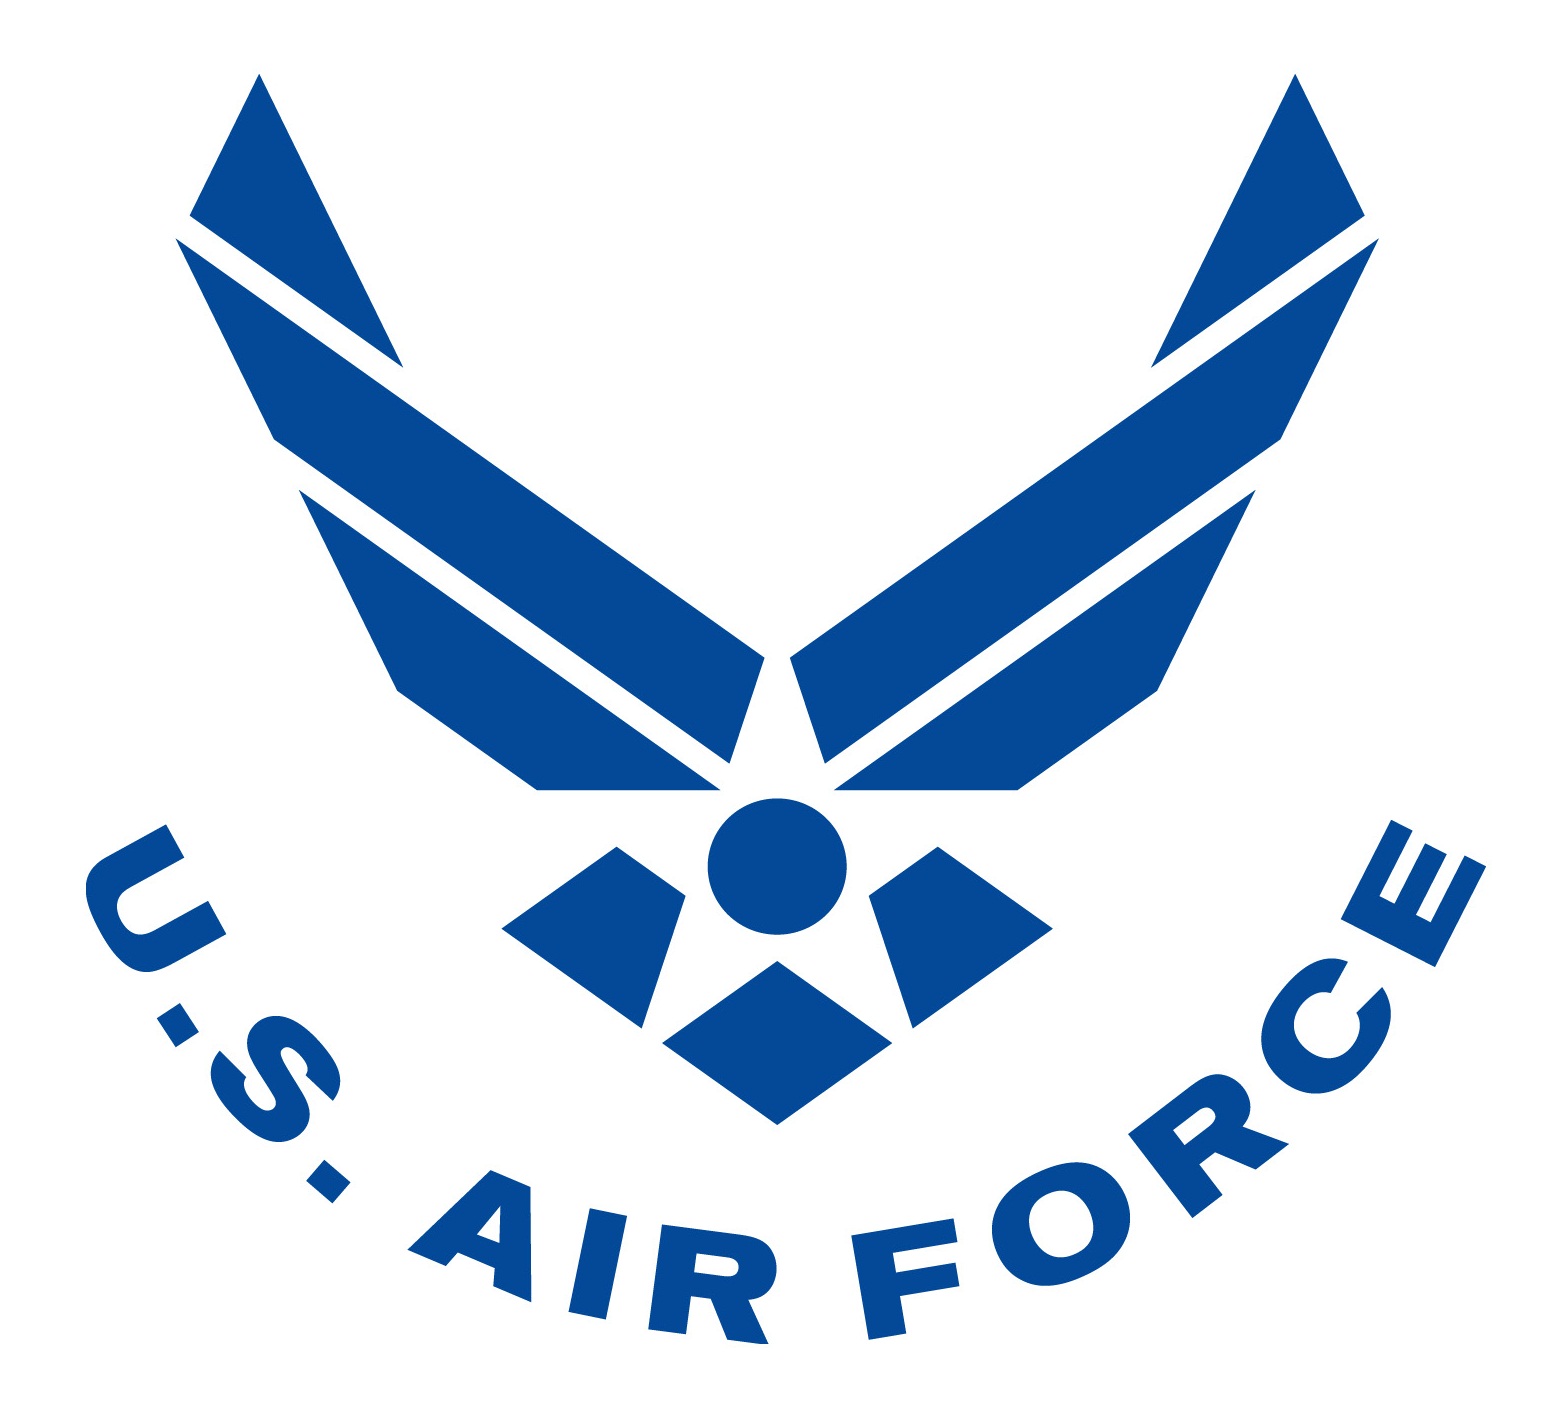 US Air Force